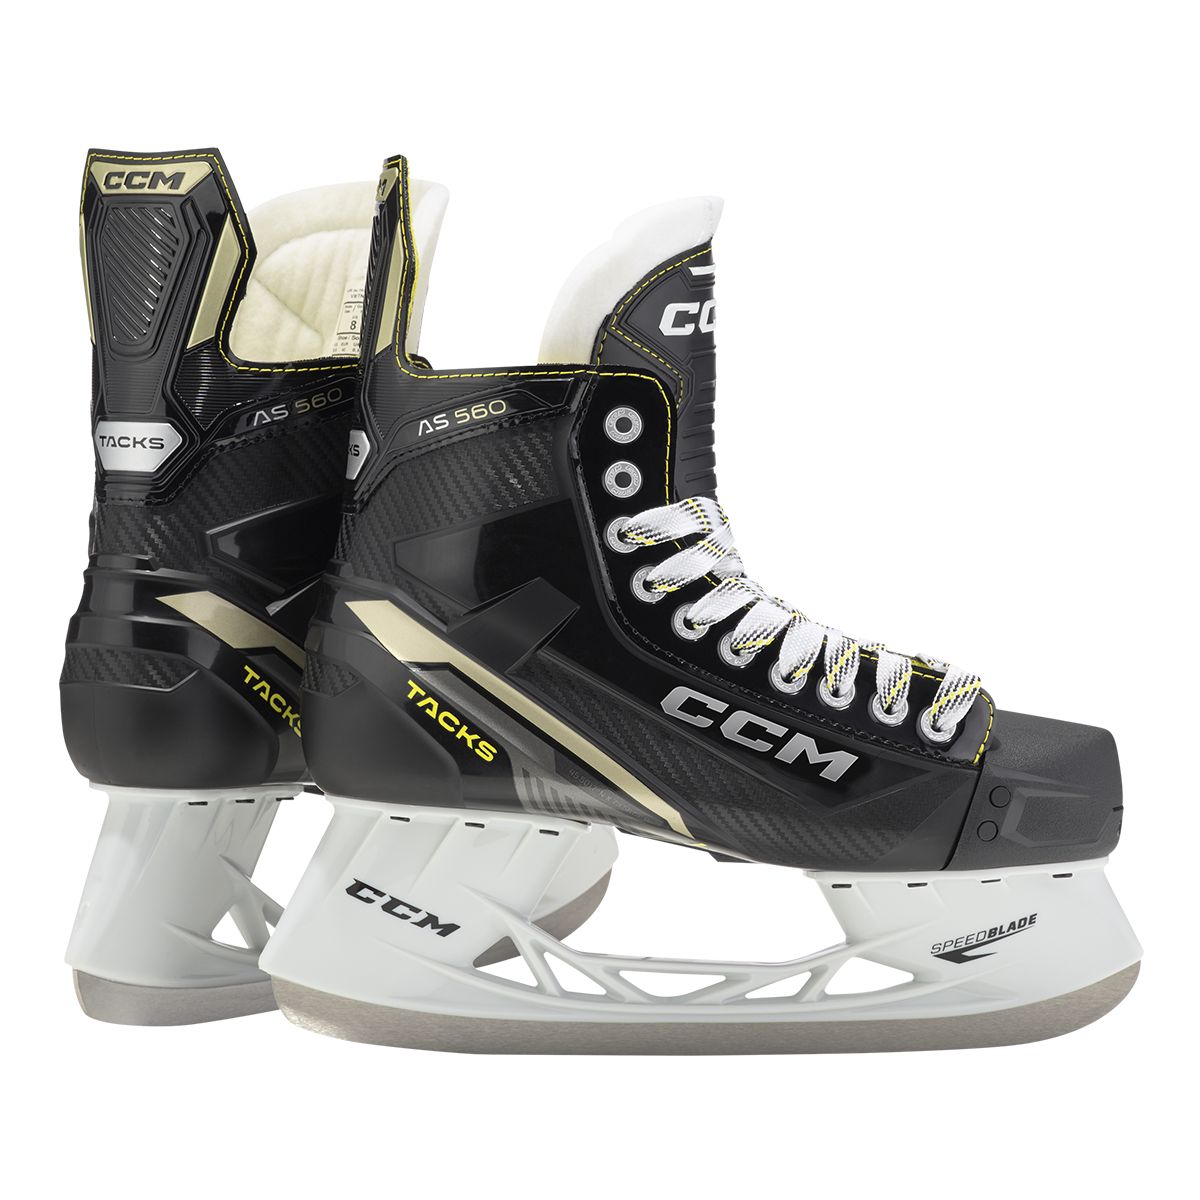 Image of CCM Tacks AS 560 Junior Hockey Skates